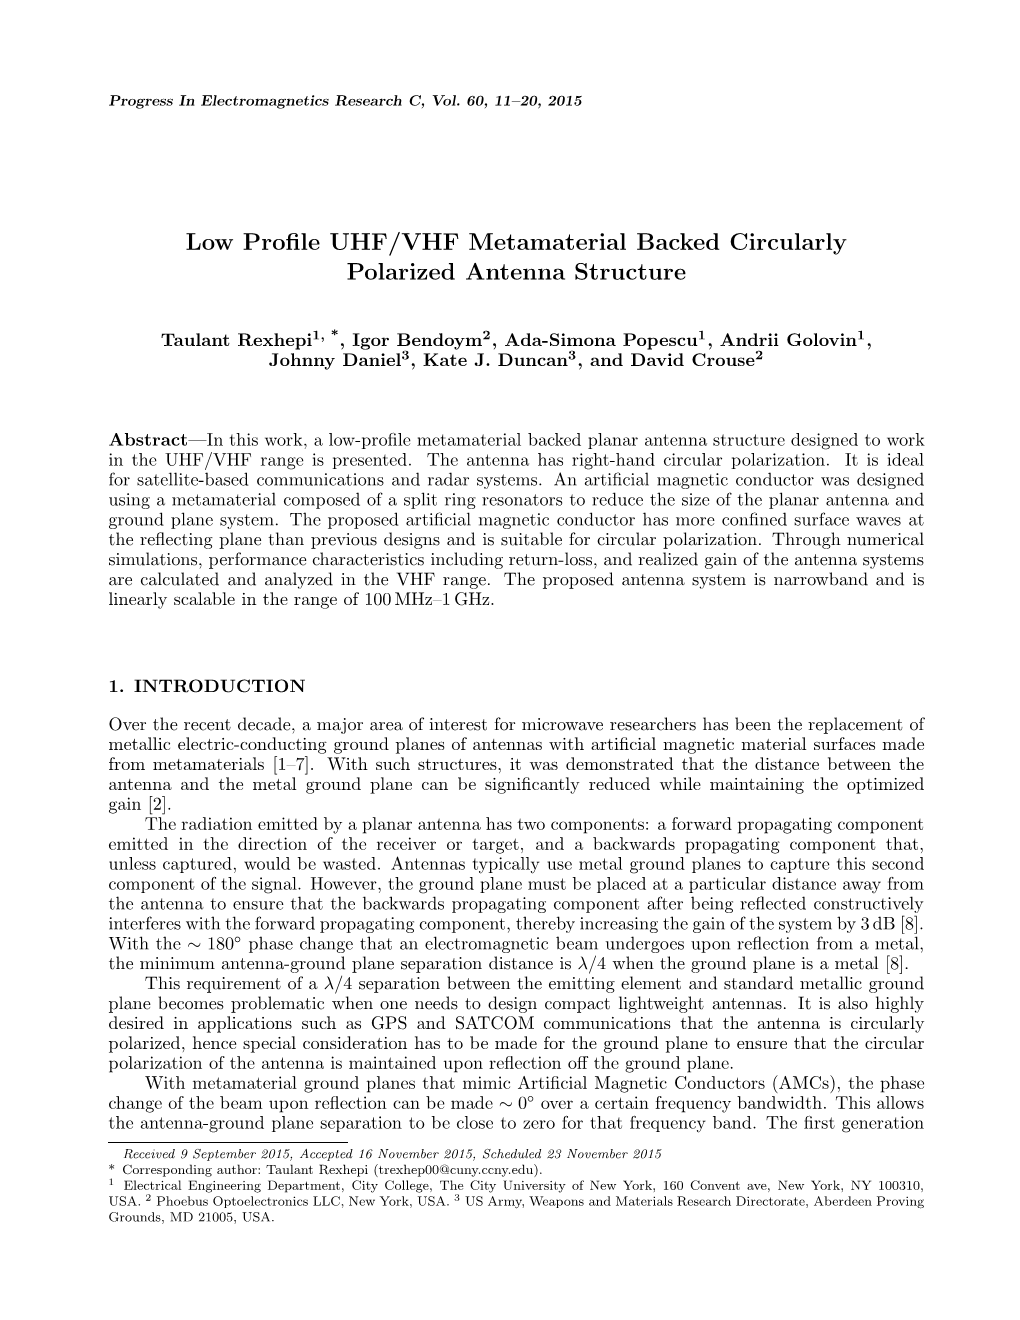 Low Profile UHF/VHF Metamaterial Backed Circularly Polarized